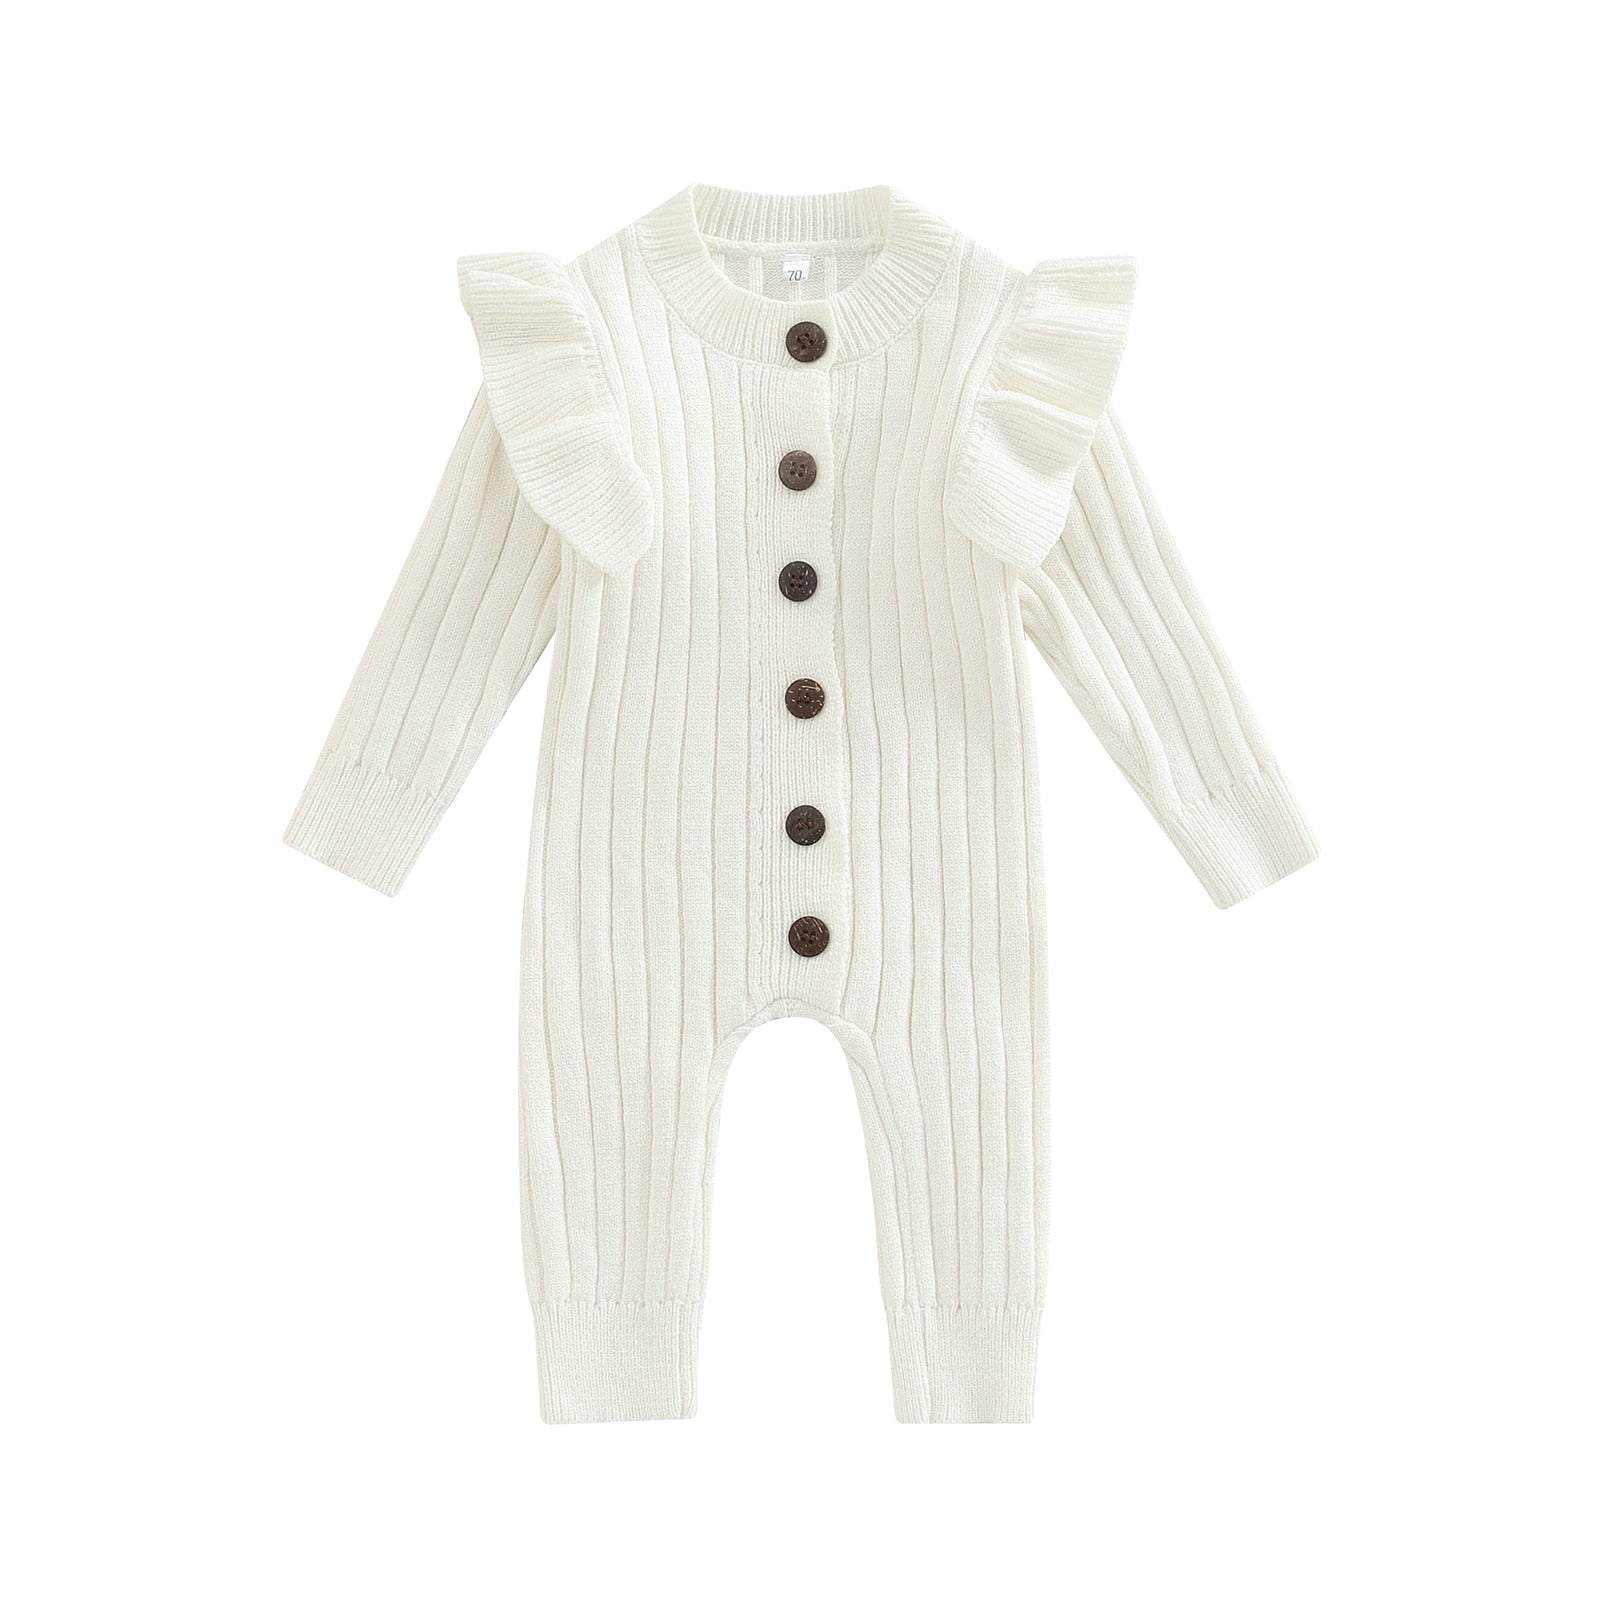 Baby girl jumpsuit in Liberty fabric - White/multicolour | Jacadi Paris